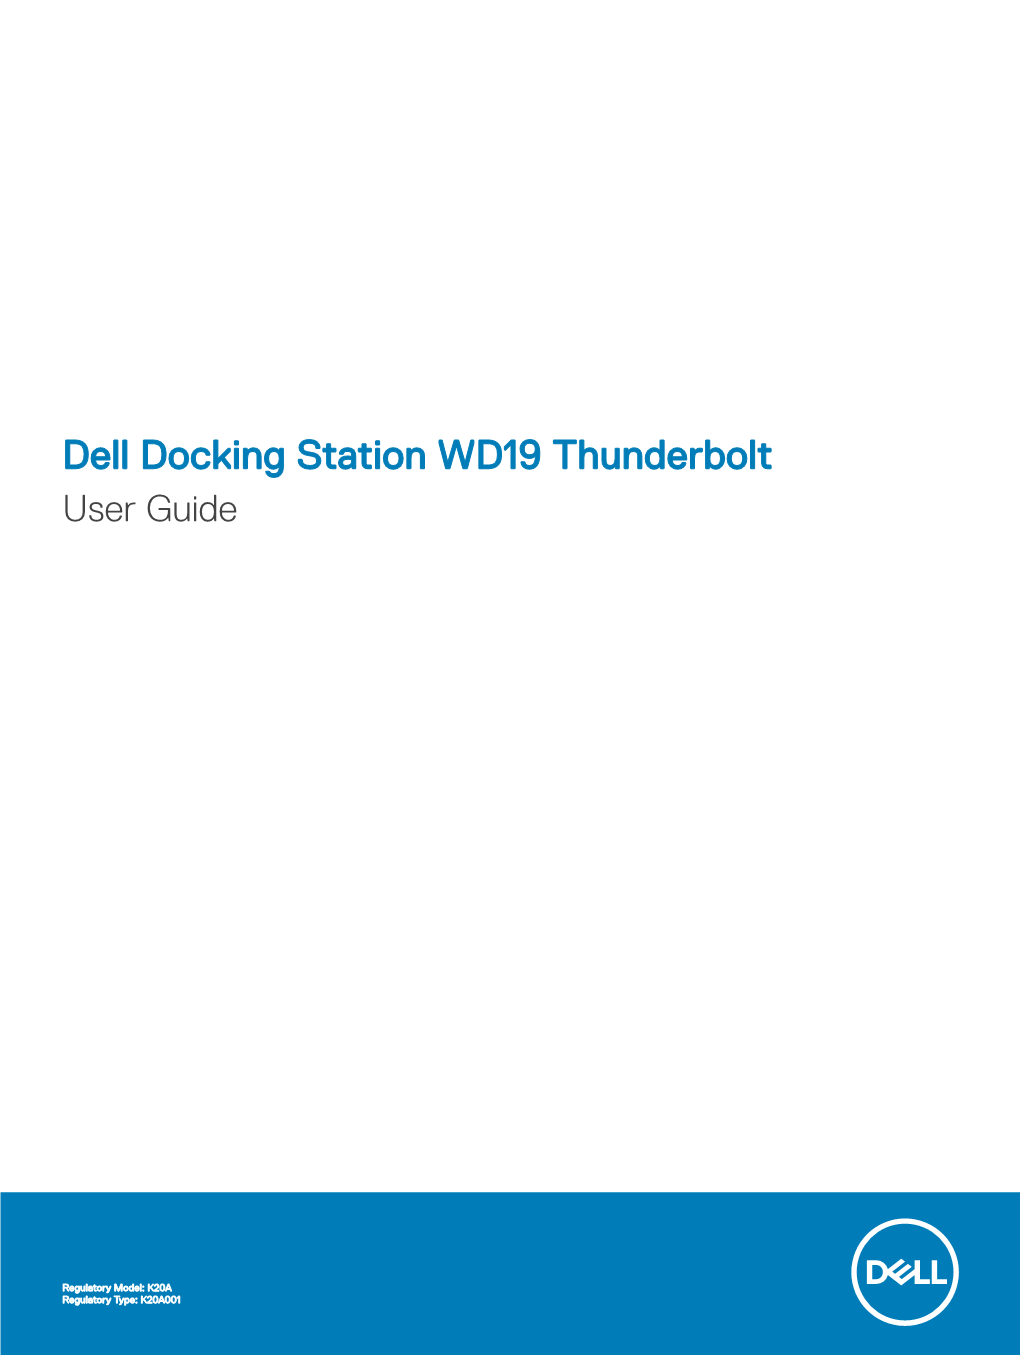 Dell Docking Station WD19 Thunderbolt User Guide